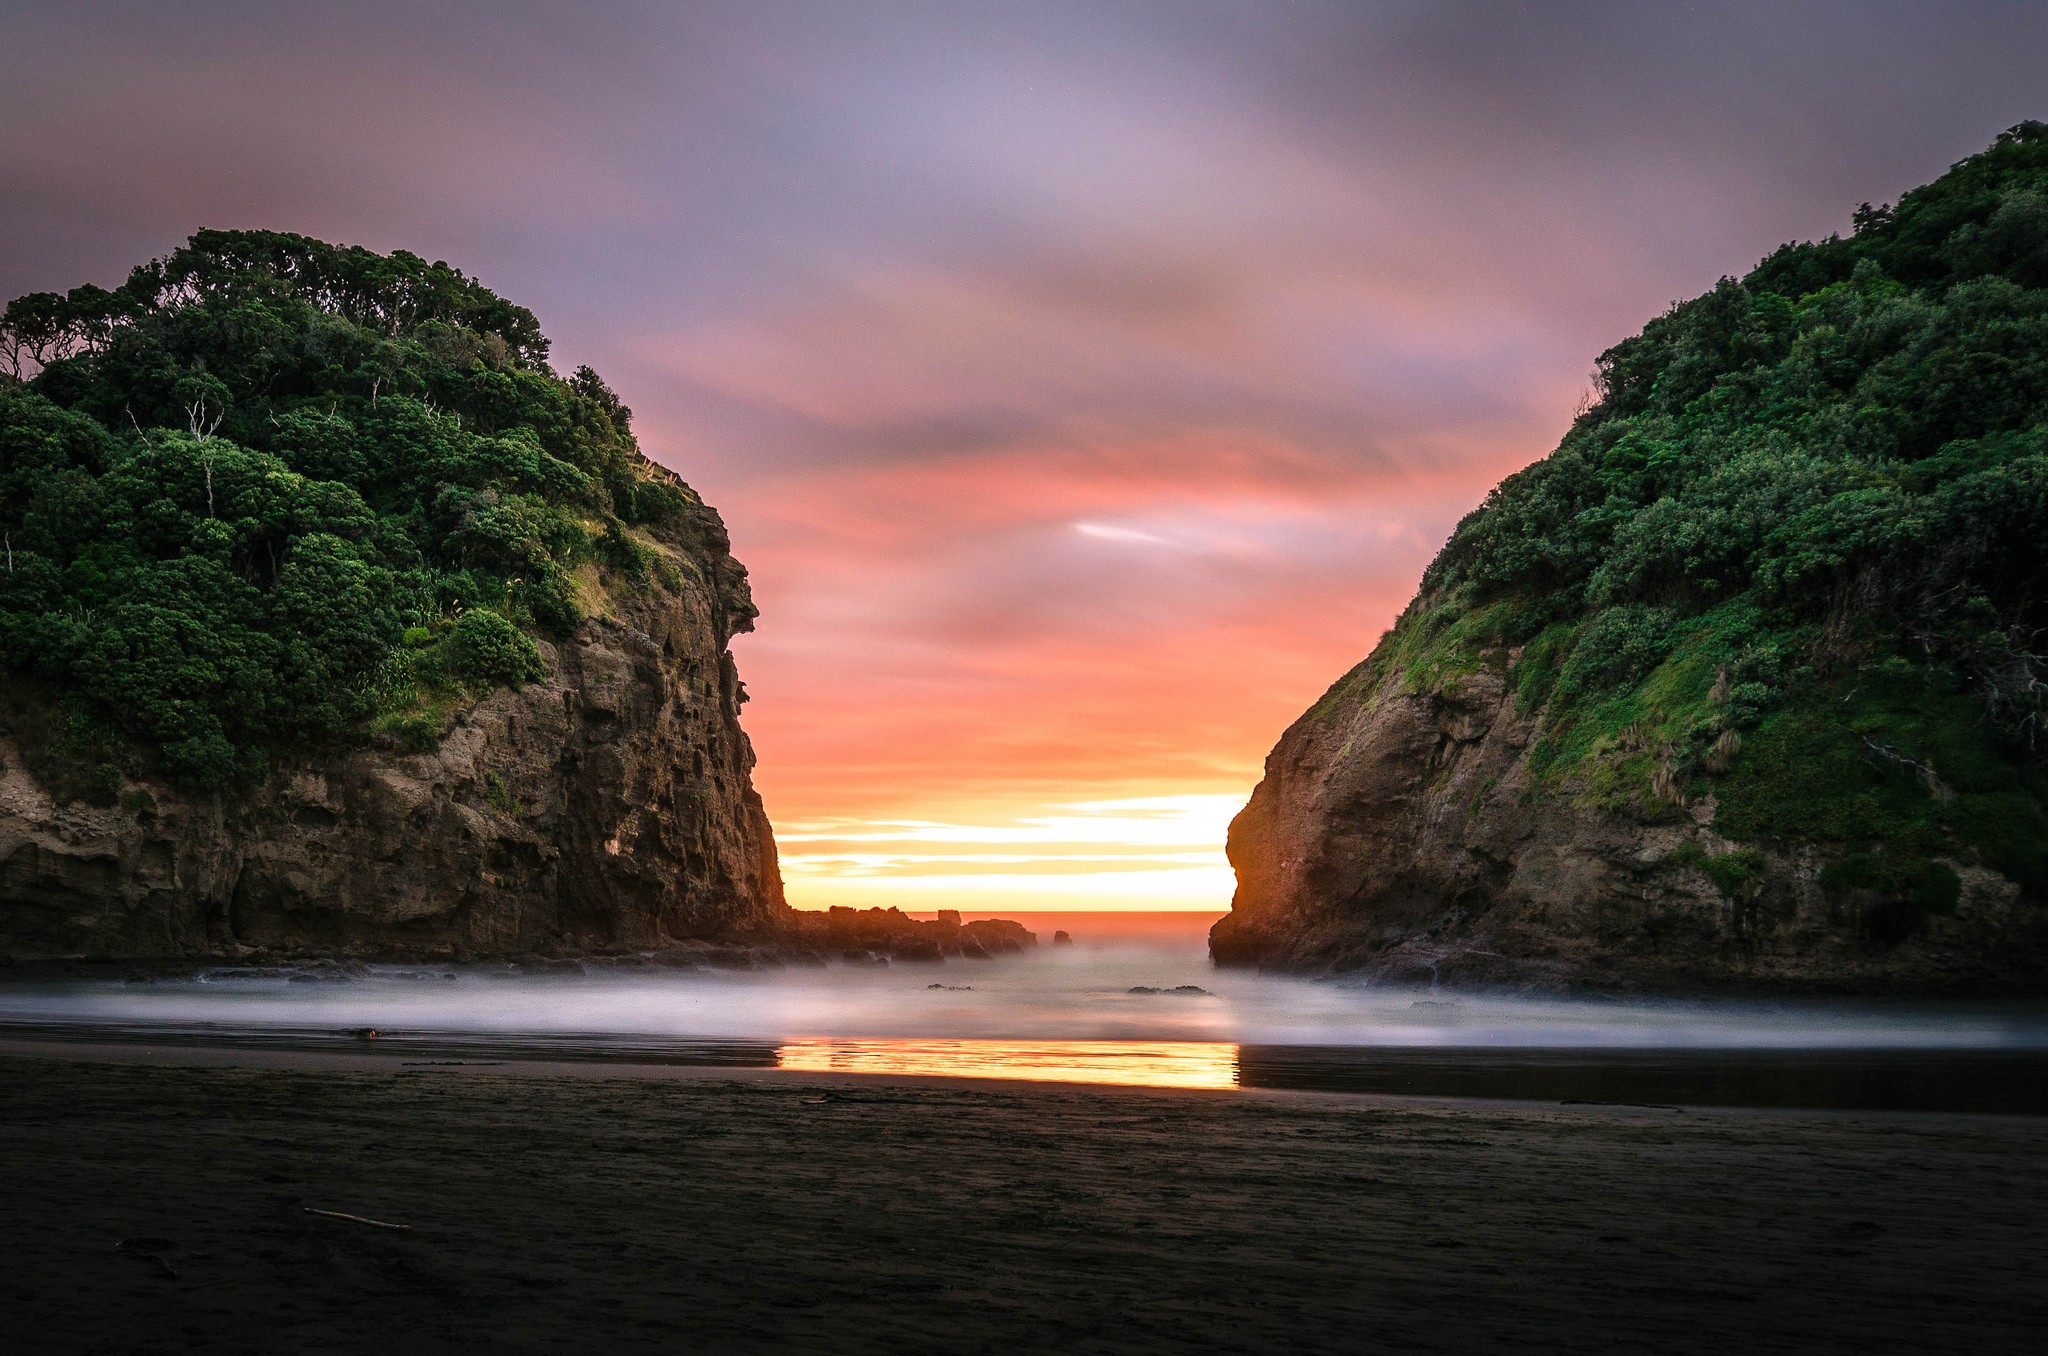 General 2048x1356 nature landscape sunset beach sea rocks sand clouds New Zealand long exposure trees low light